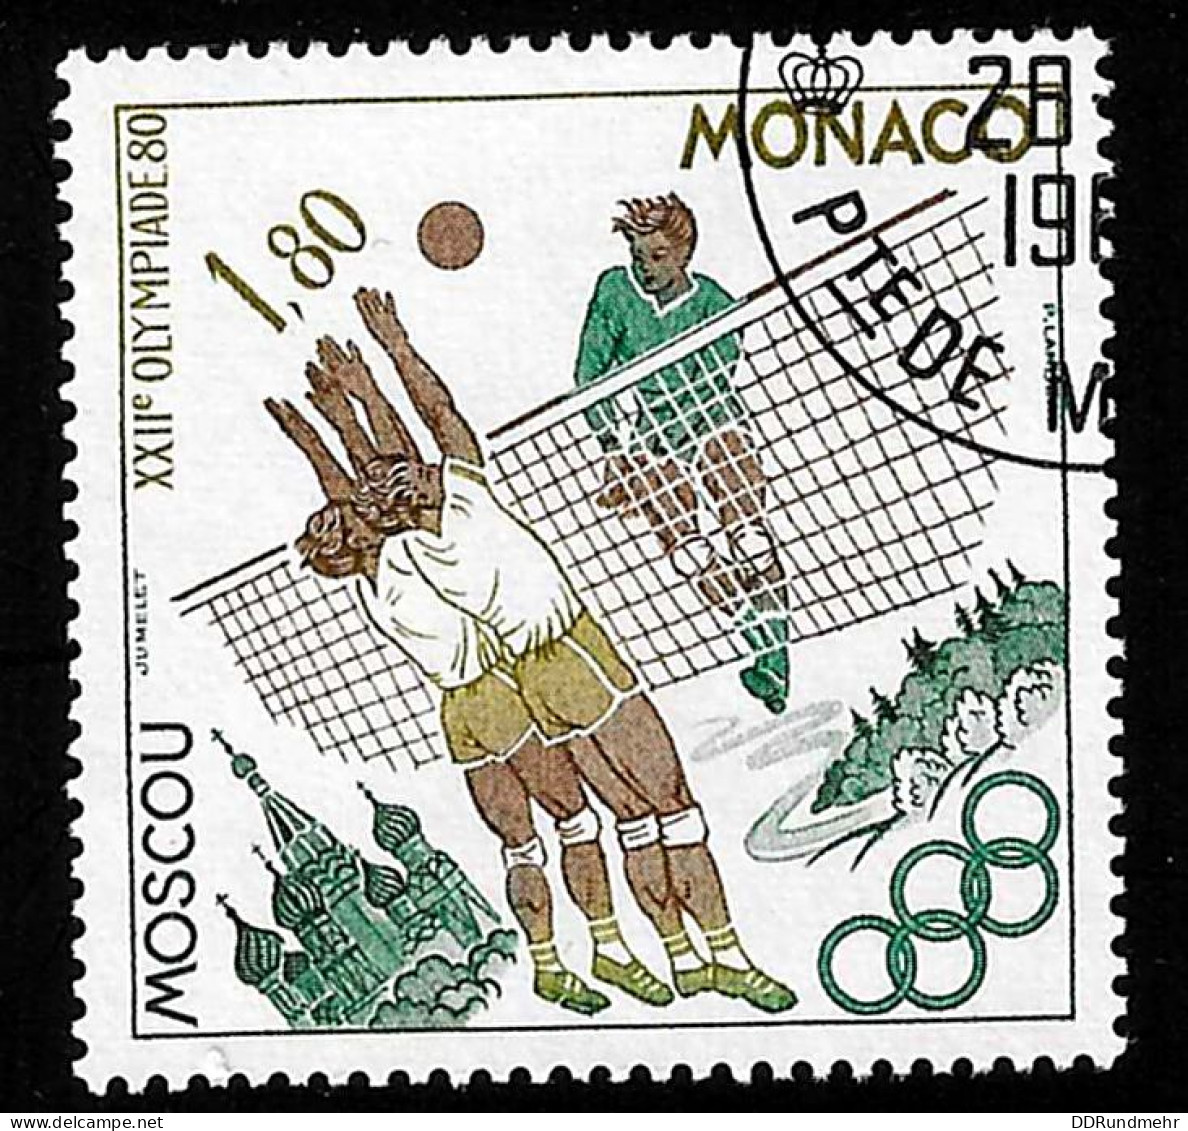 1980  Volleyball Michel MC 1418 Stamp Number MC 1224 Yvert Et Tellier MC 1221 Stanley Gibbons MC 1438 Used - Oblitérés